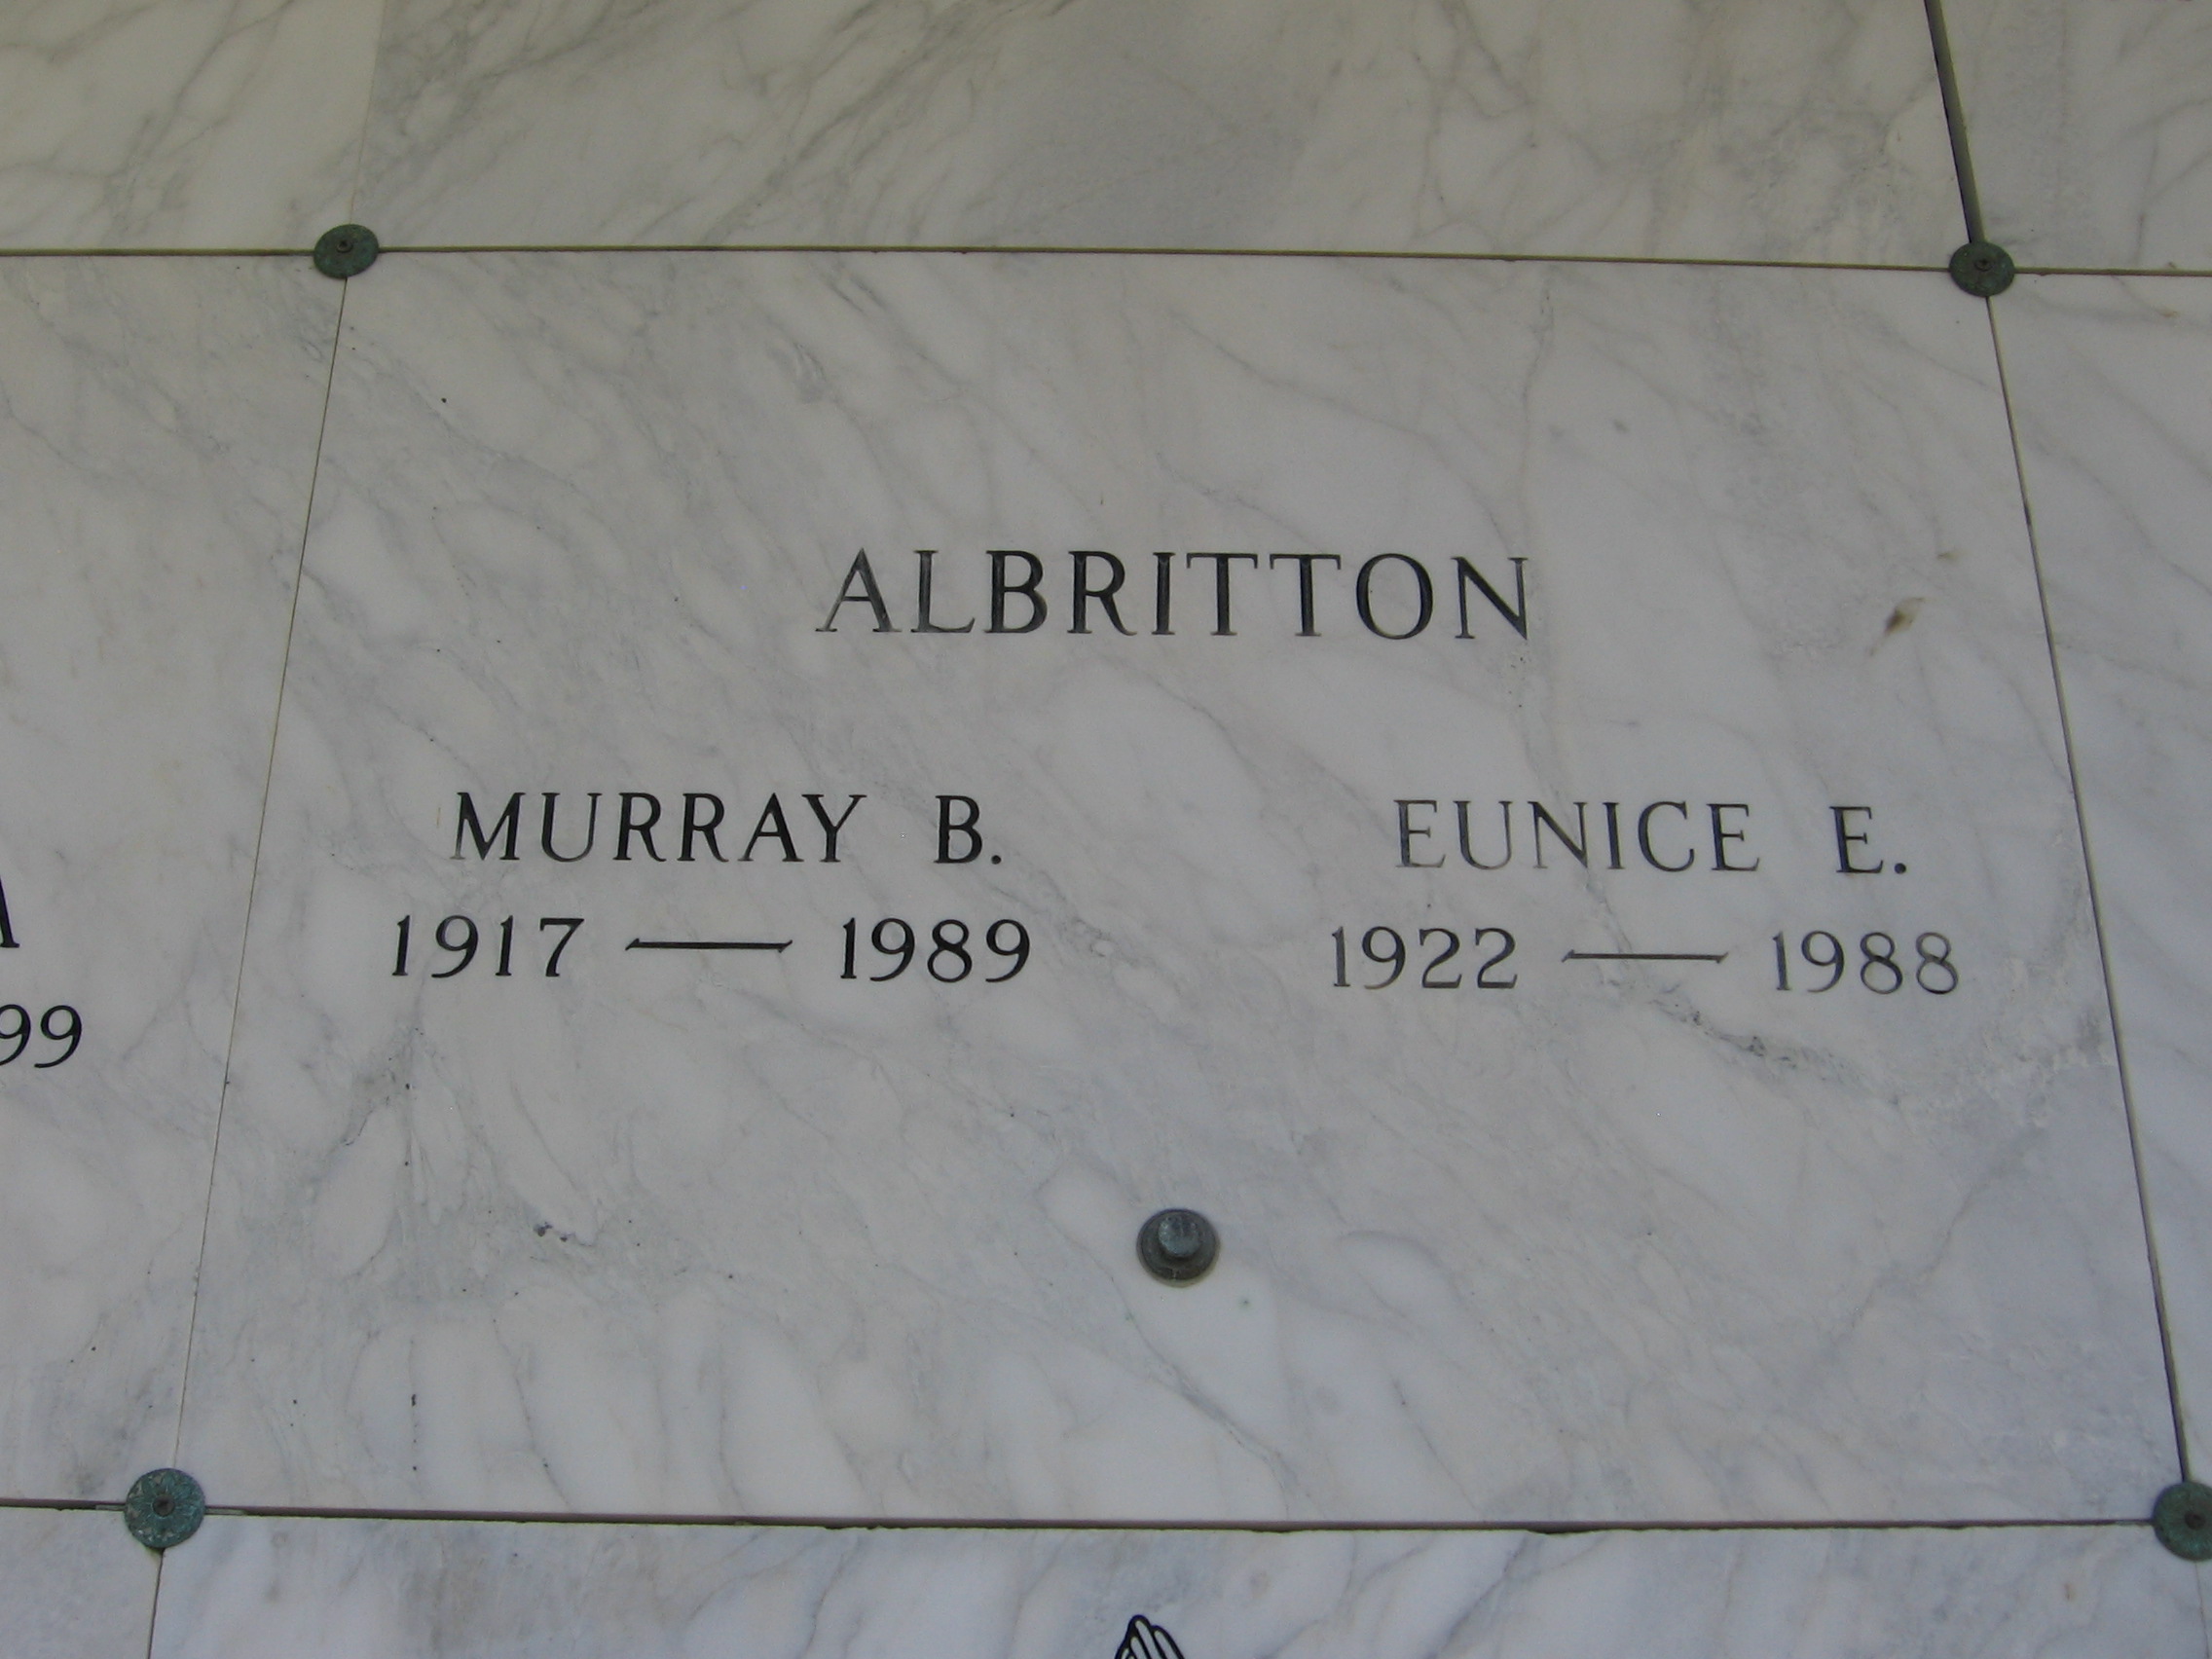 Murray B Albritton